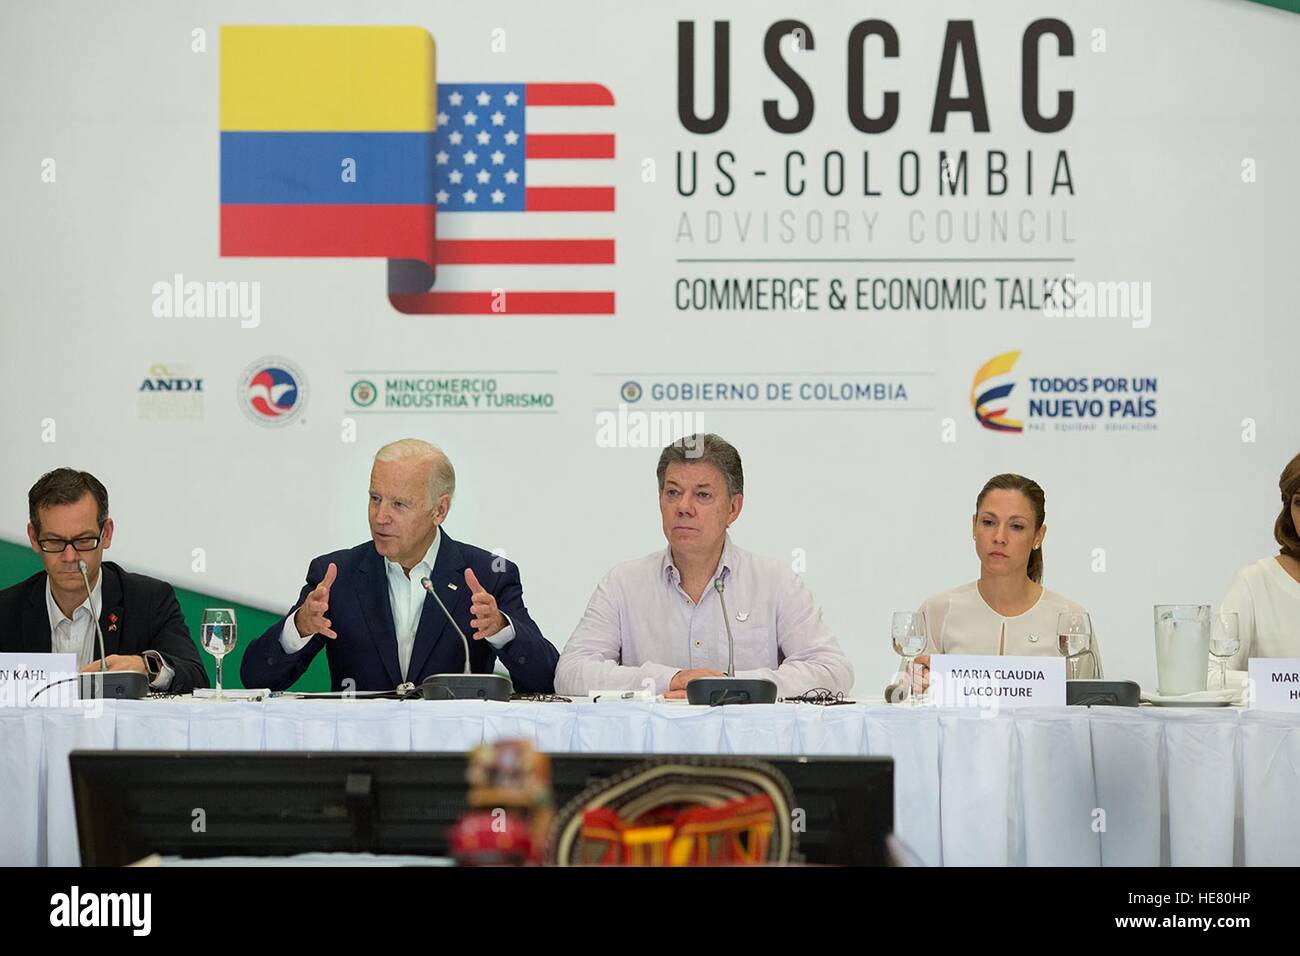 US-Vizepräsident Joe Biden spricht bei den Vereinigten Staat Kolumbien Handels- und Wirtschafts-Gesprächen während der U.S.-Kolumbien Advisory Council Meeting 2. Dezember 2016 in Cartagena, Kolumbien. Stockfoto